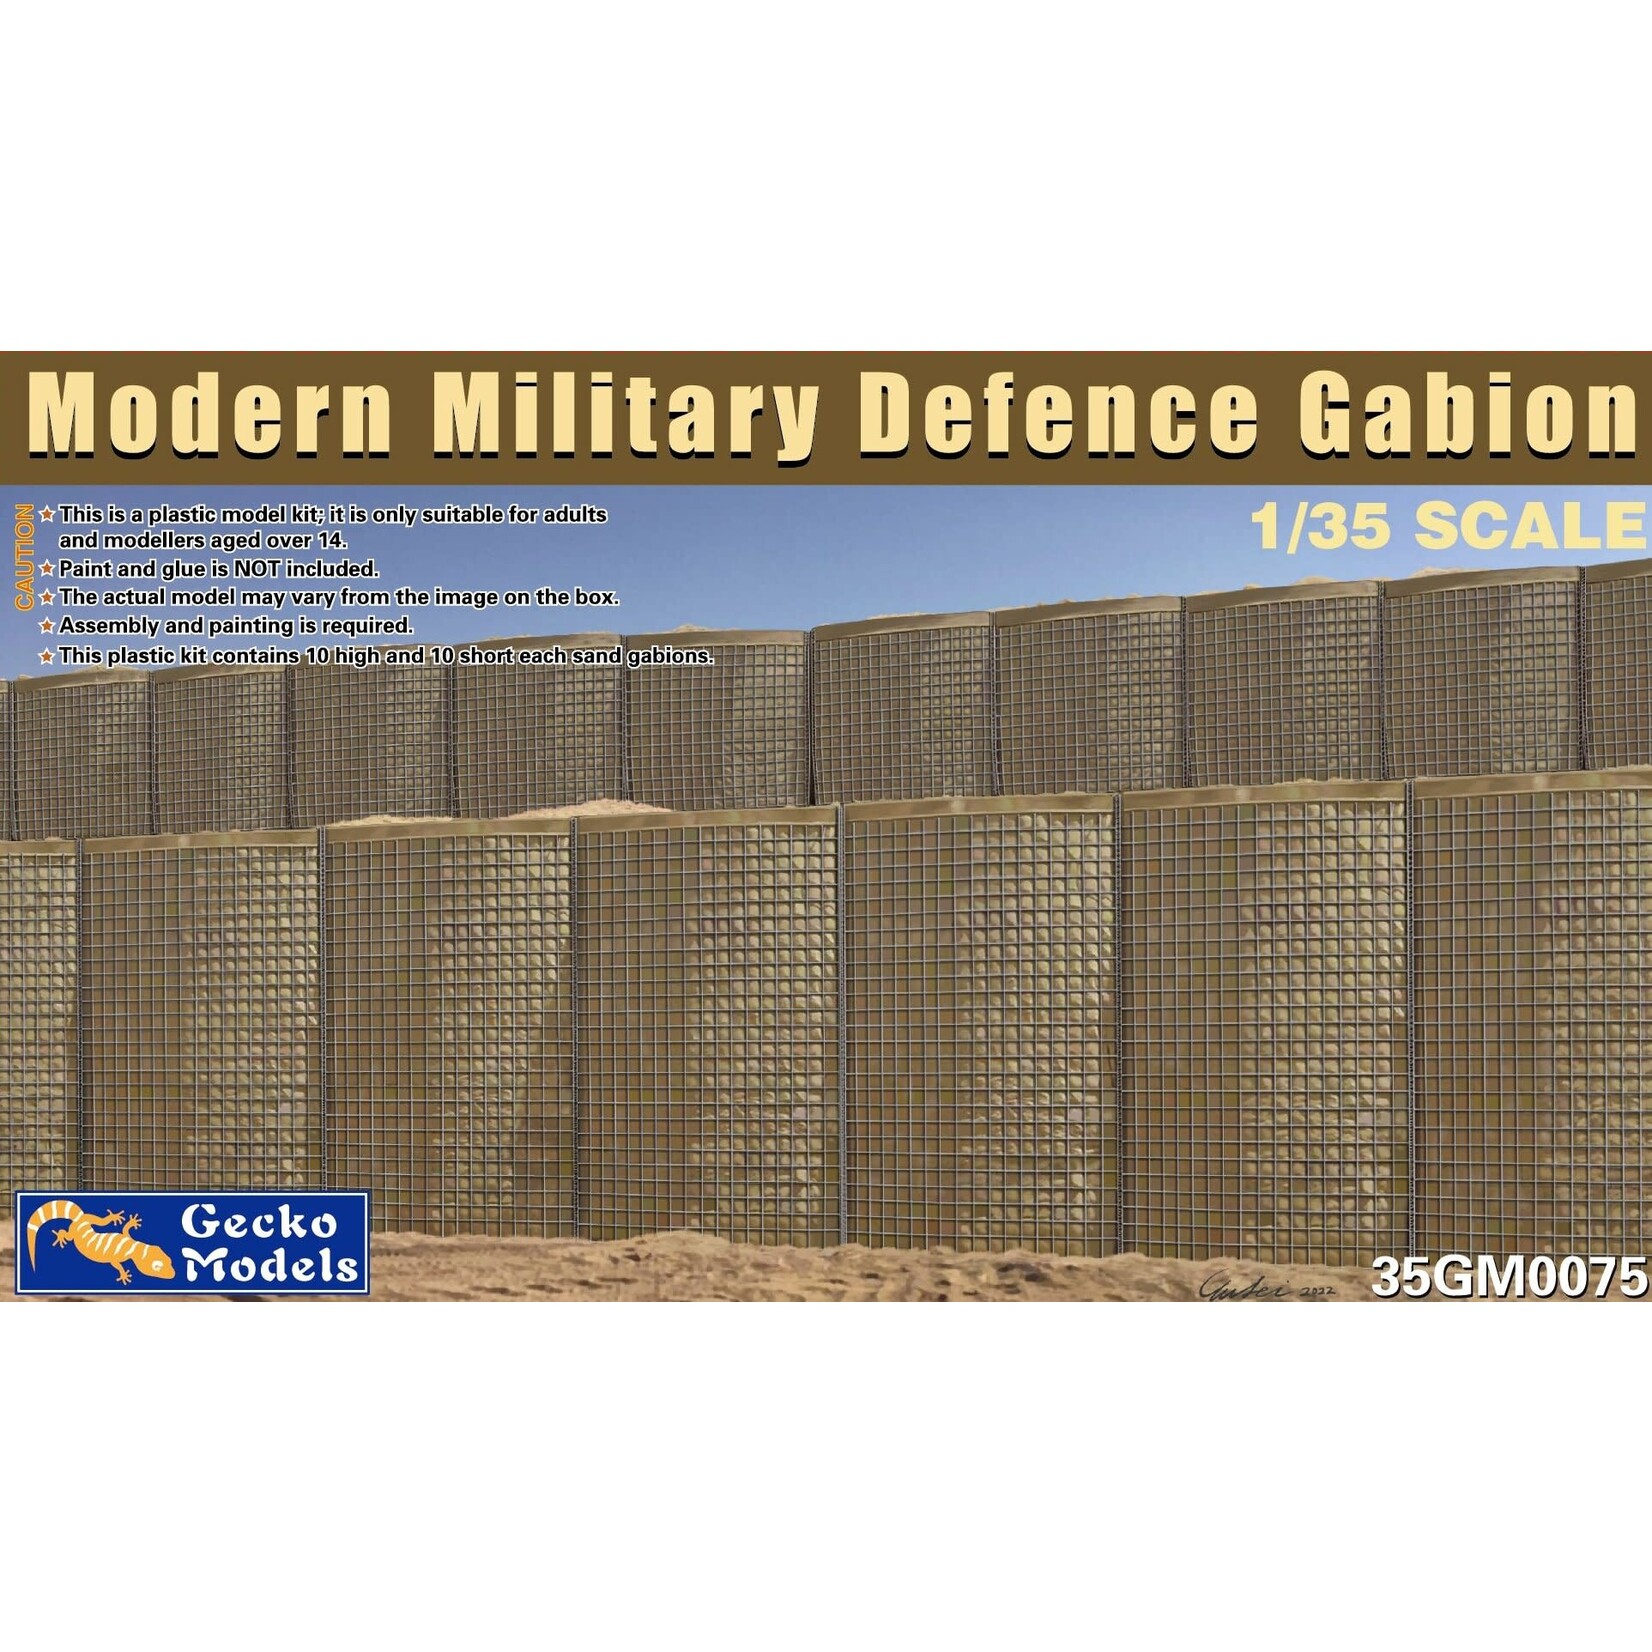 Gecko 35GM0075 Modern Military Defence Gabion (1/35)